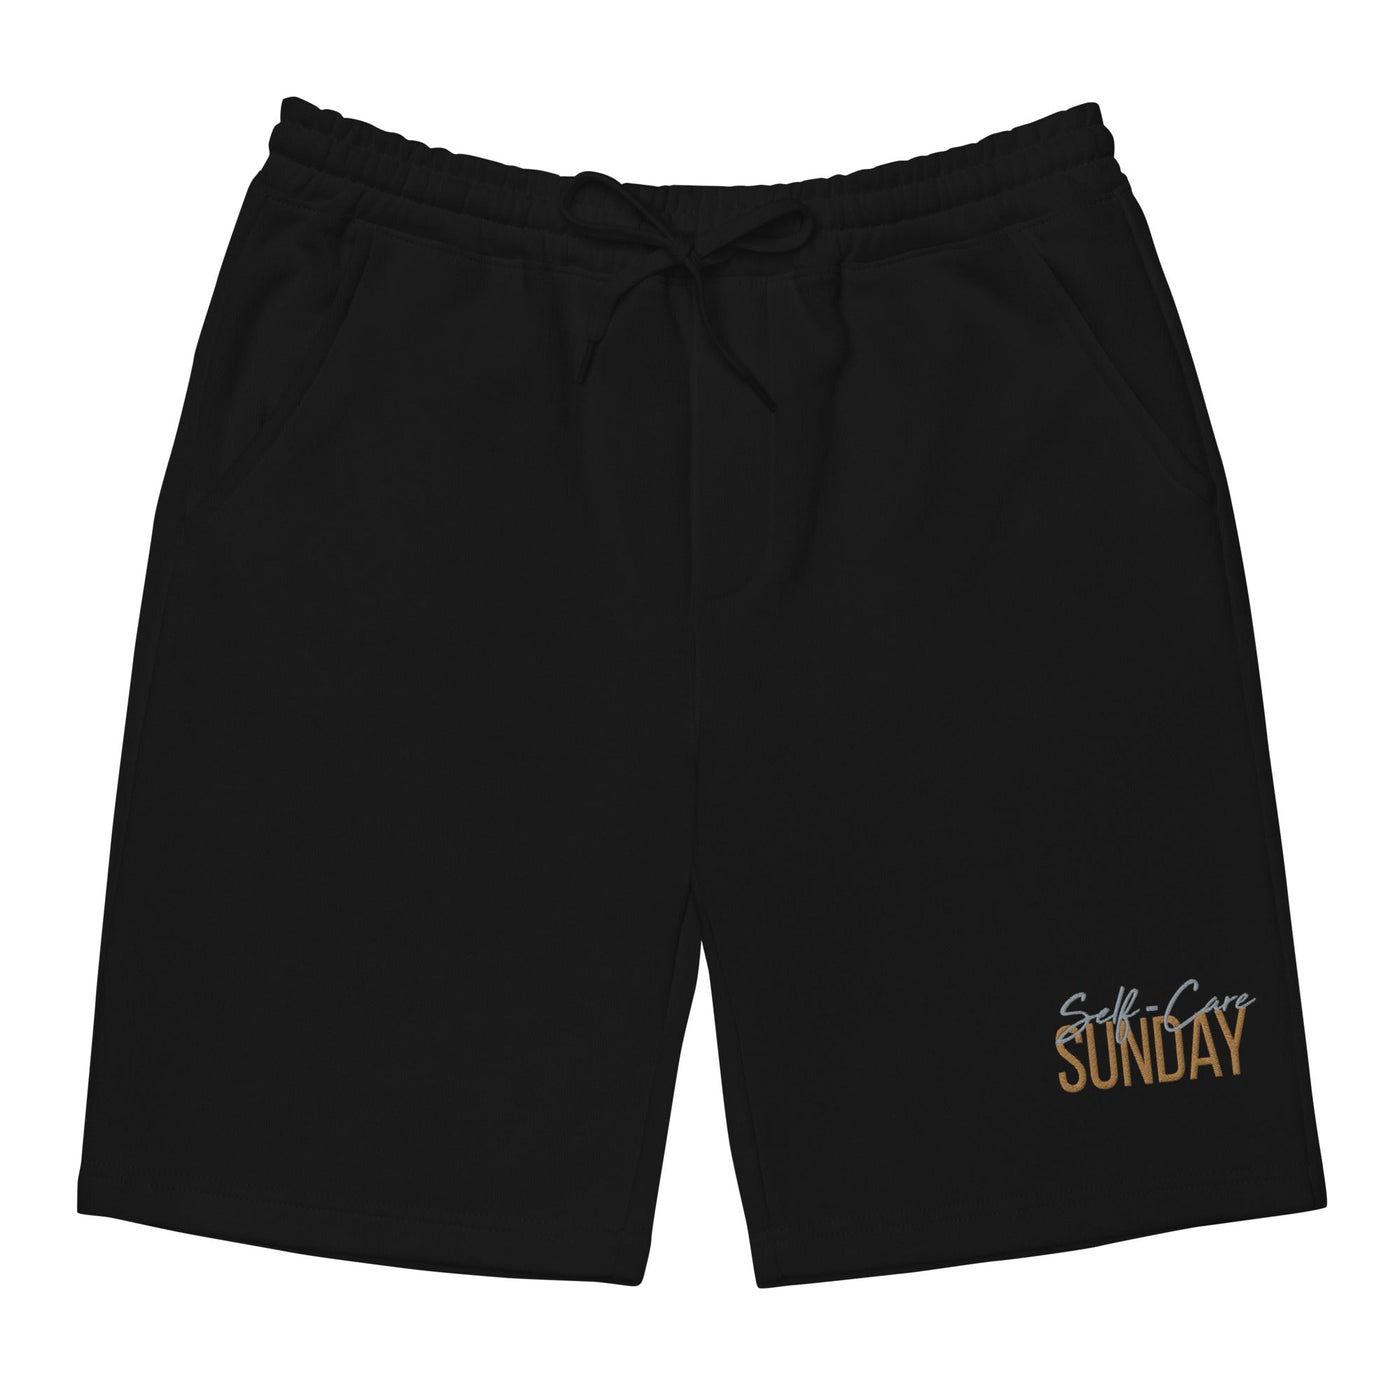 Self-Care Sunday Men's Fleece Shorts